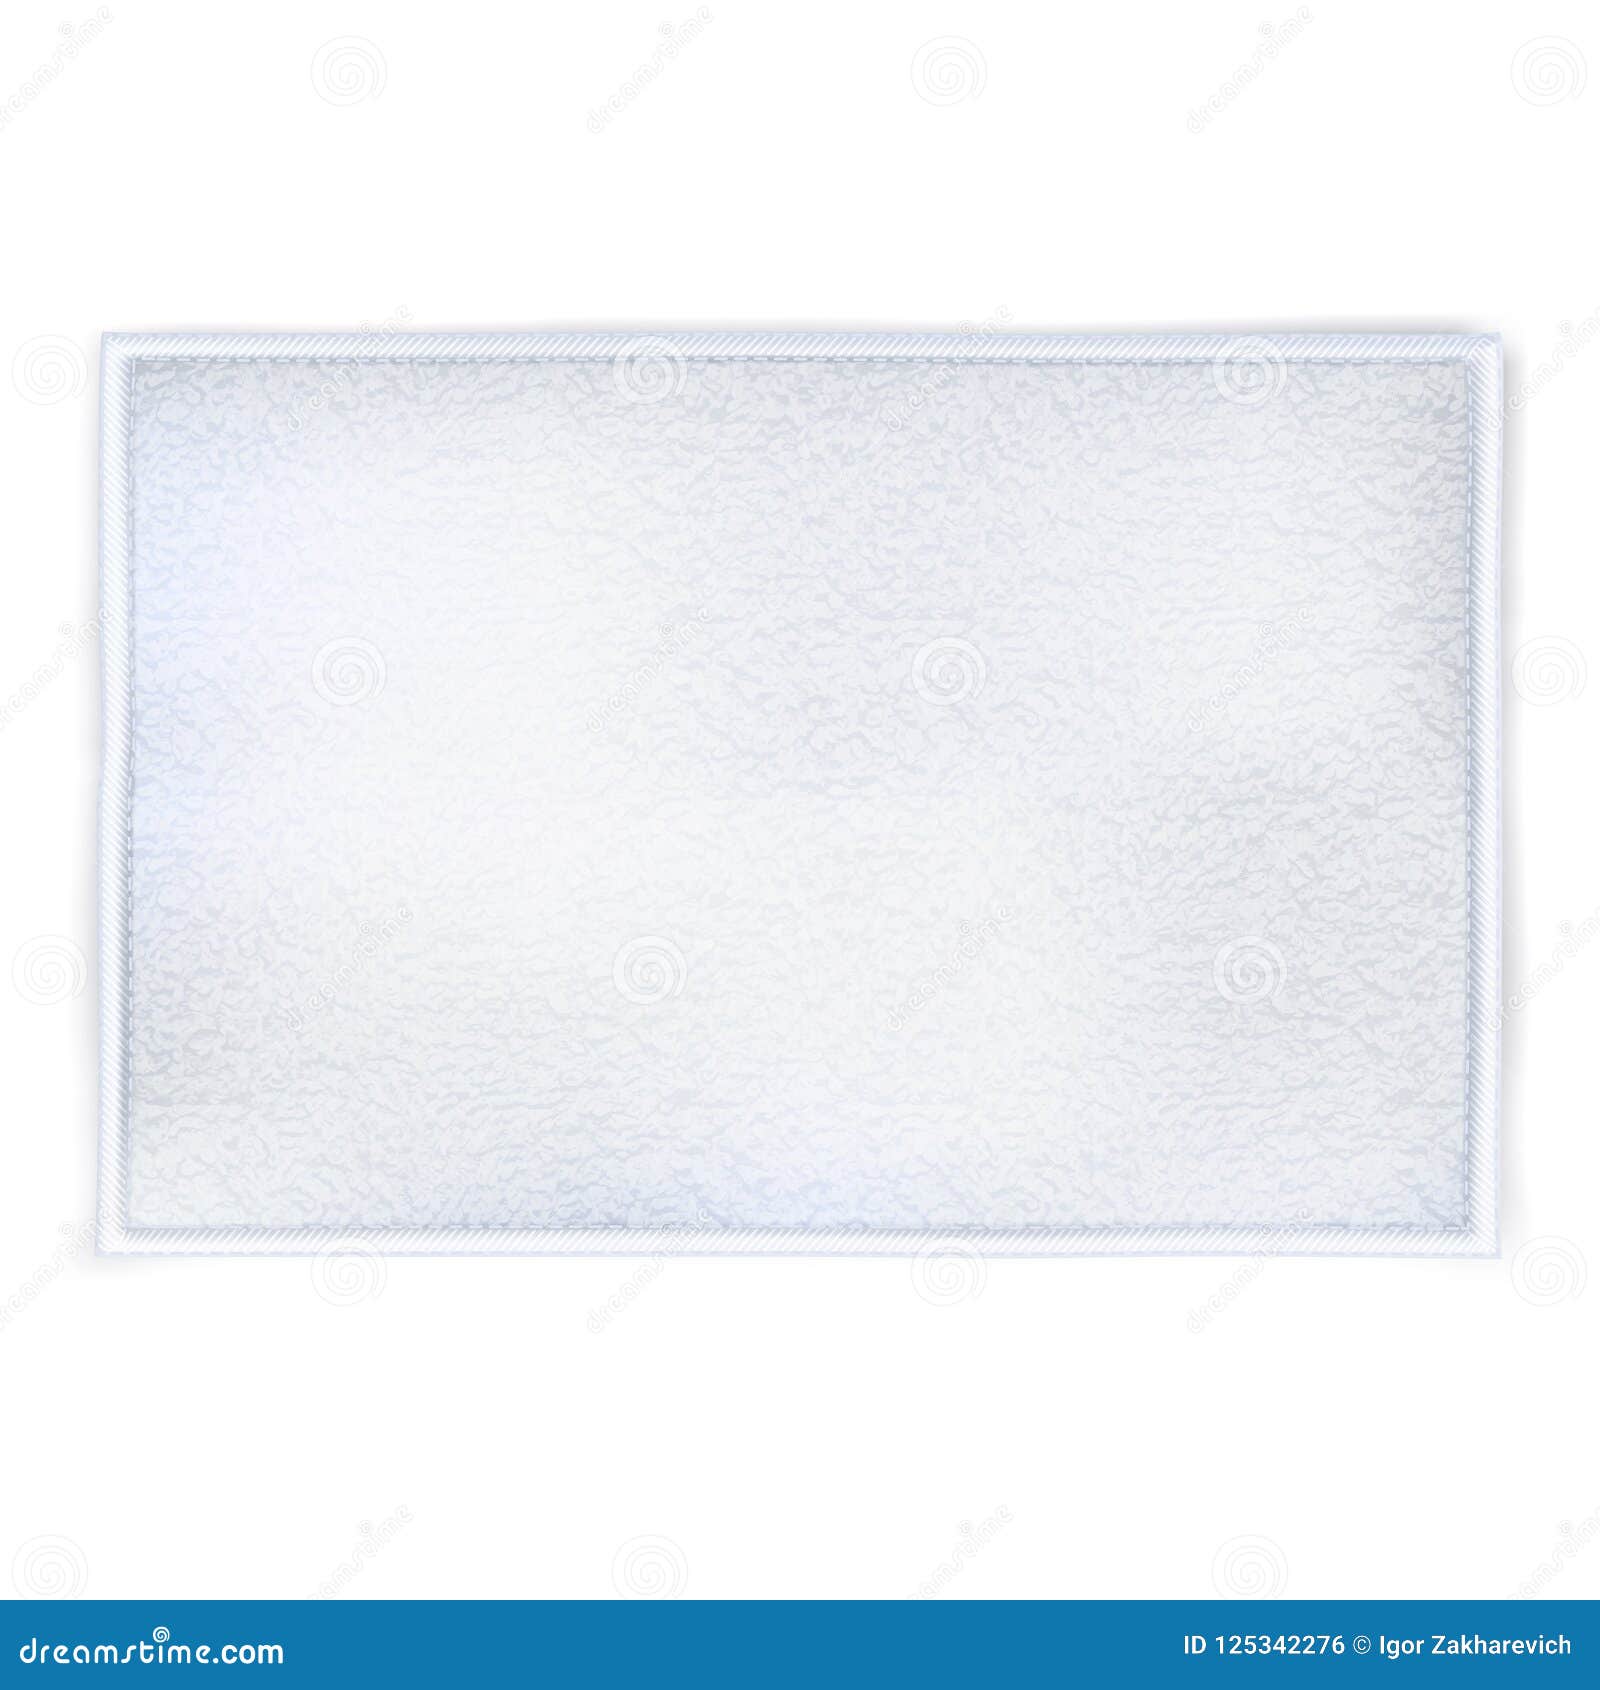 white unfolded towel